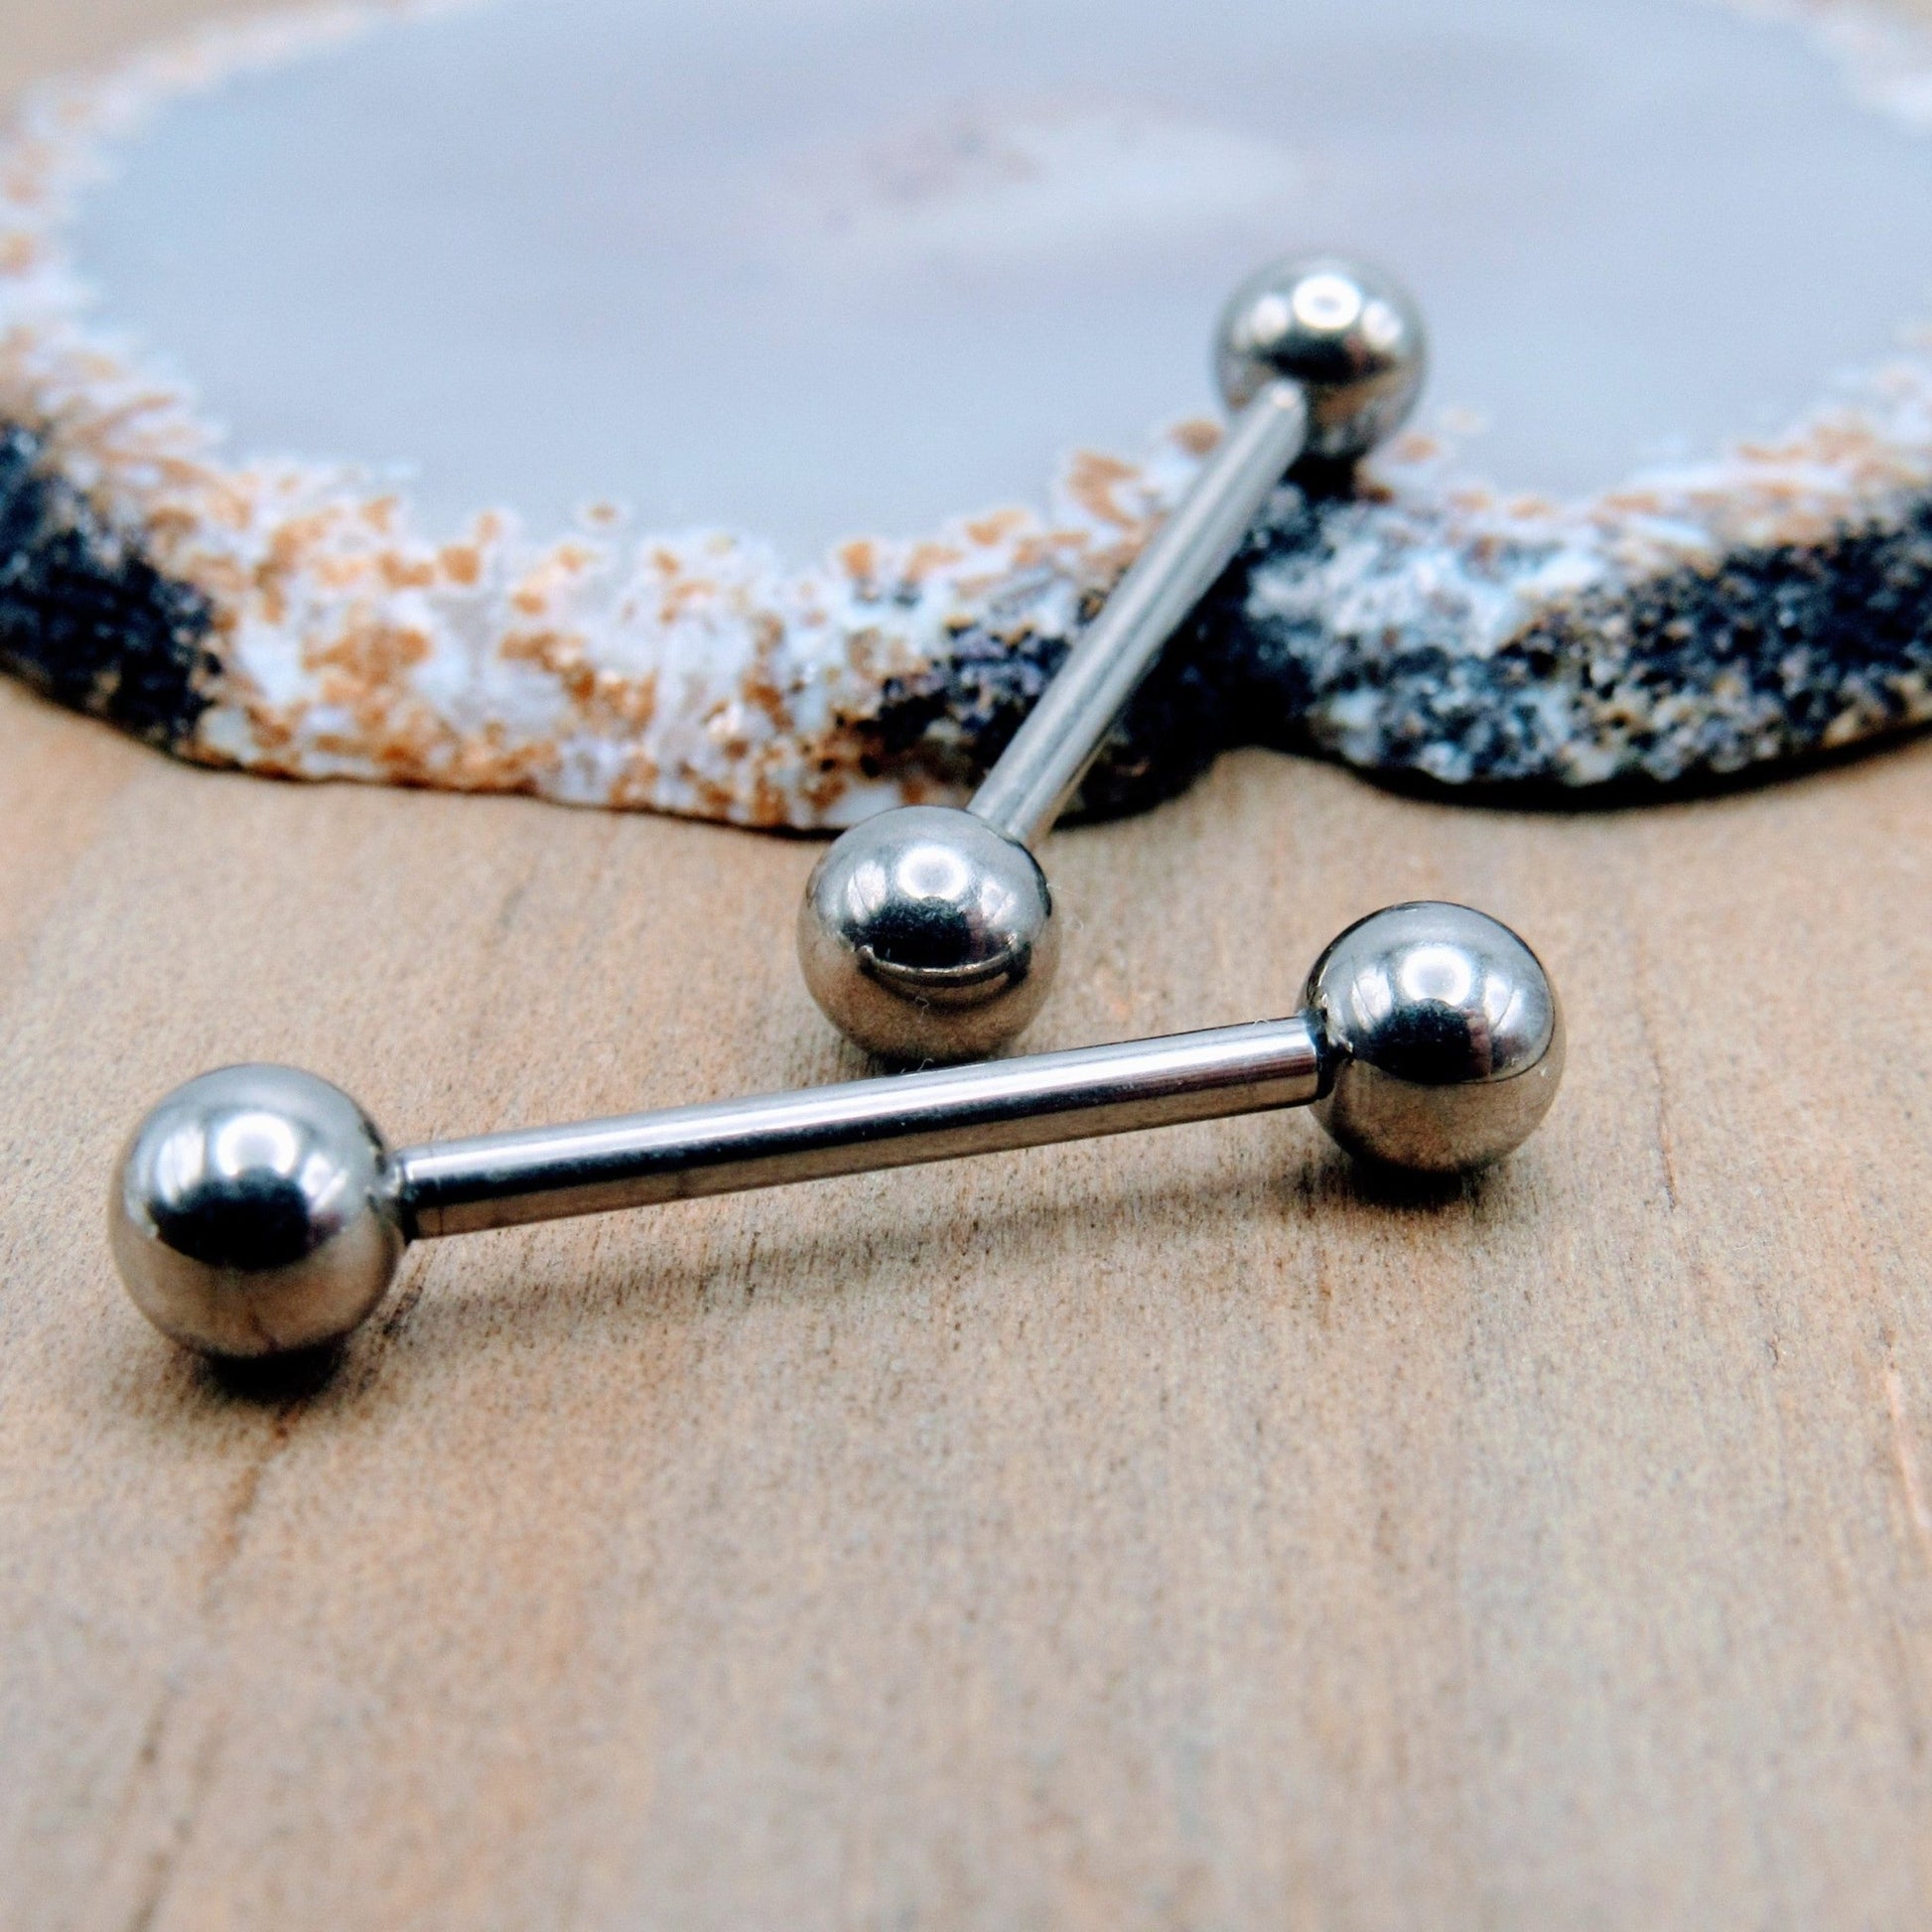 14g Titanium nipple piercing barbell set straight high polish silver internally threaded body jewelry pair - Siren Body Jewelry